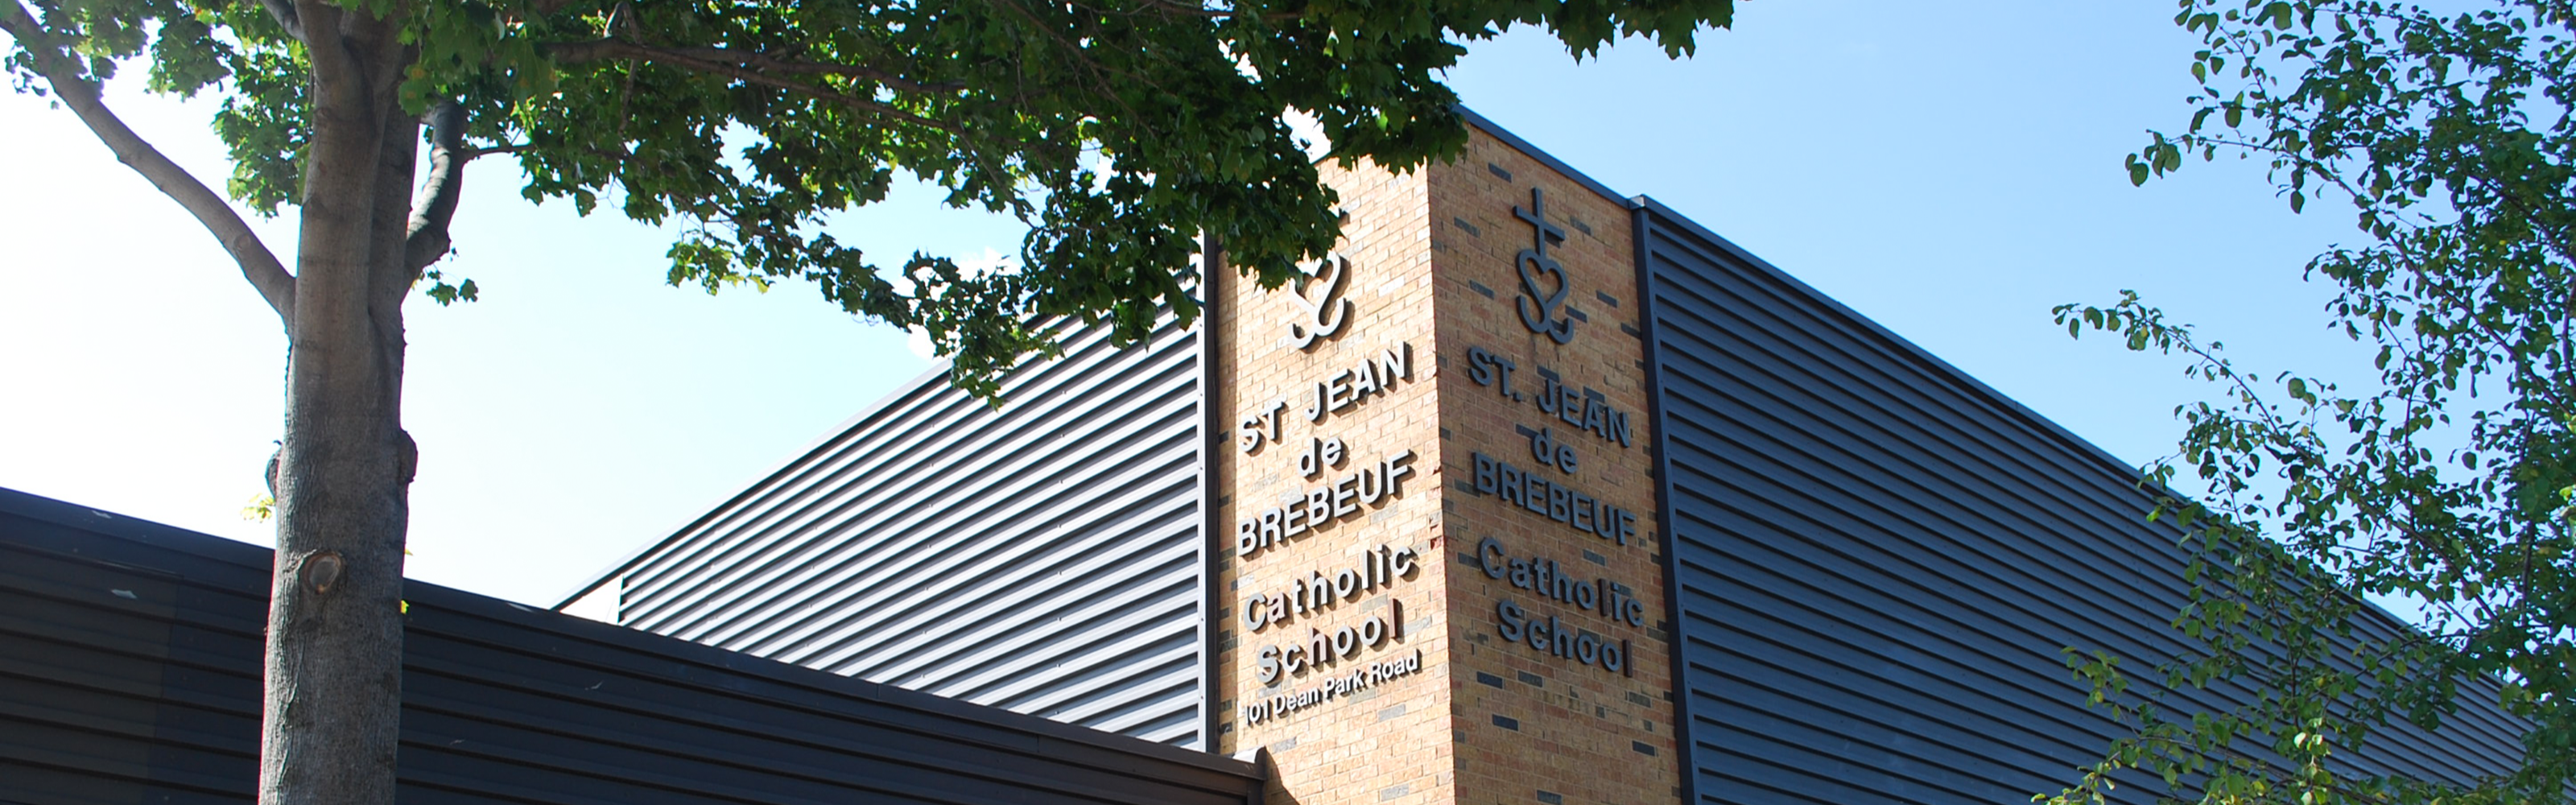 The front of the  St. Jean de Brebeuf Catholic School building.